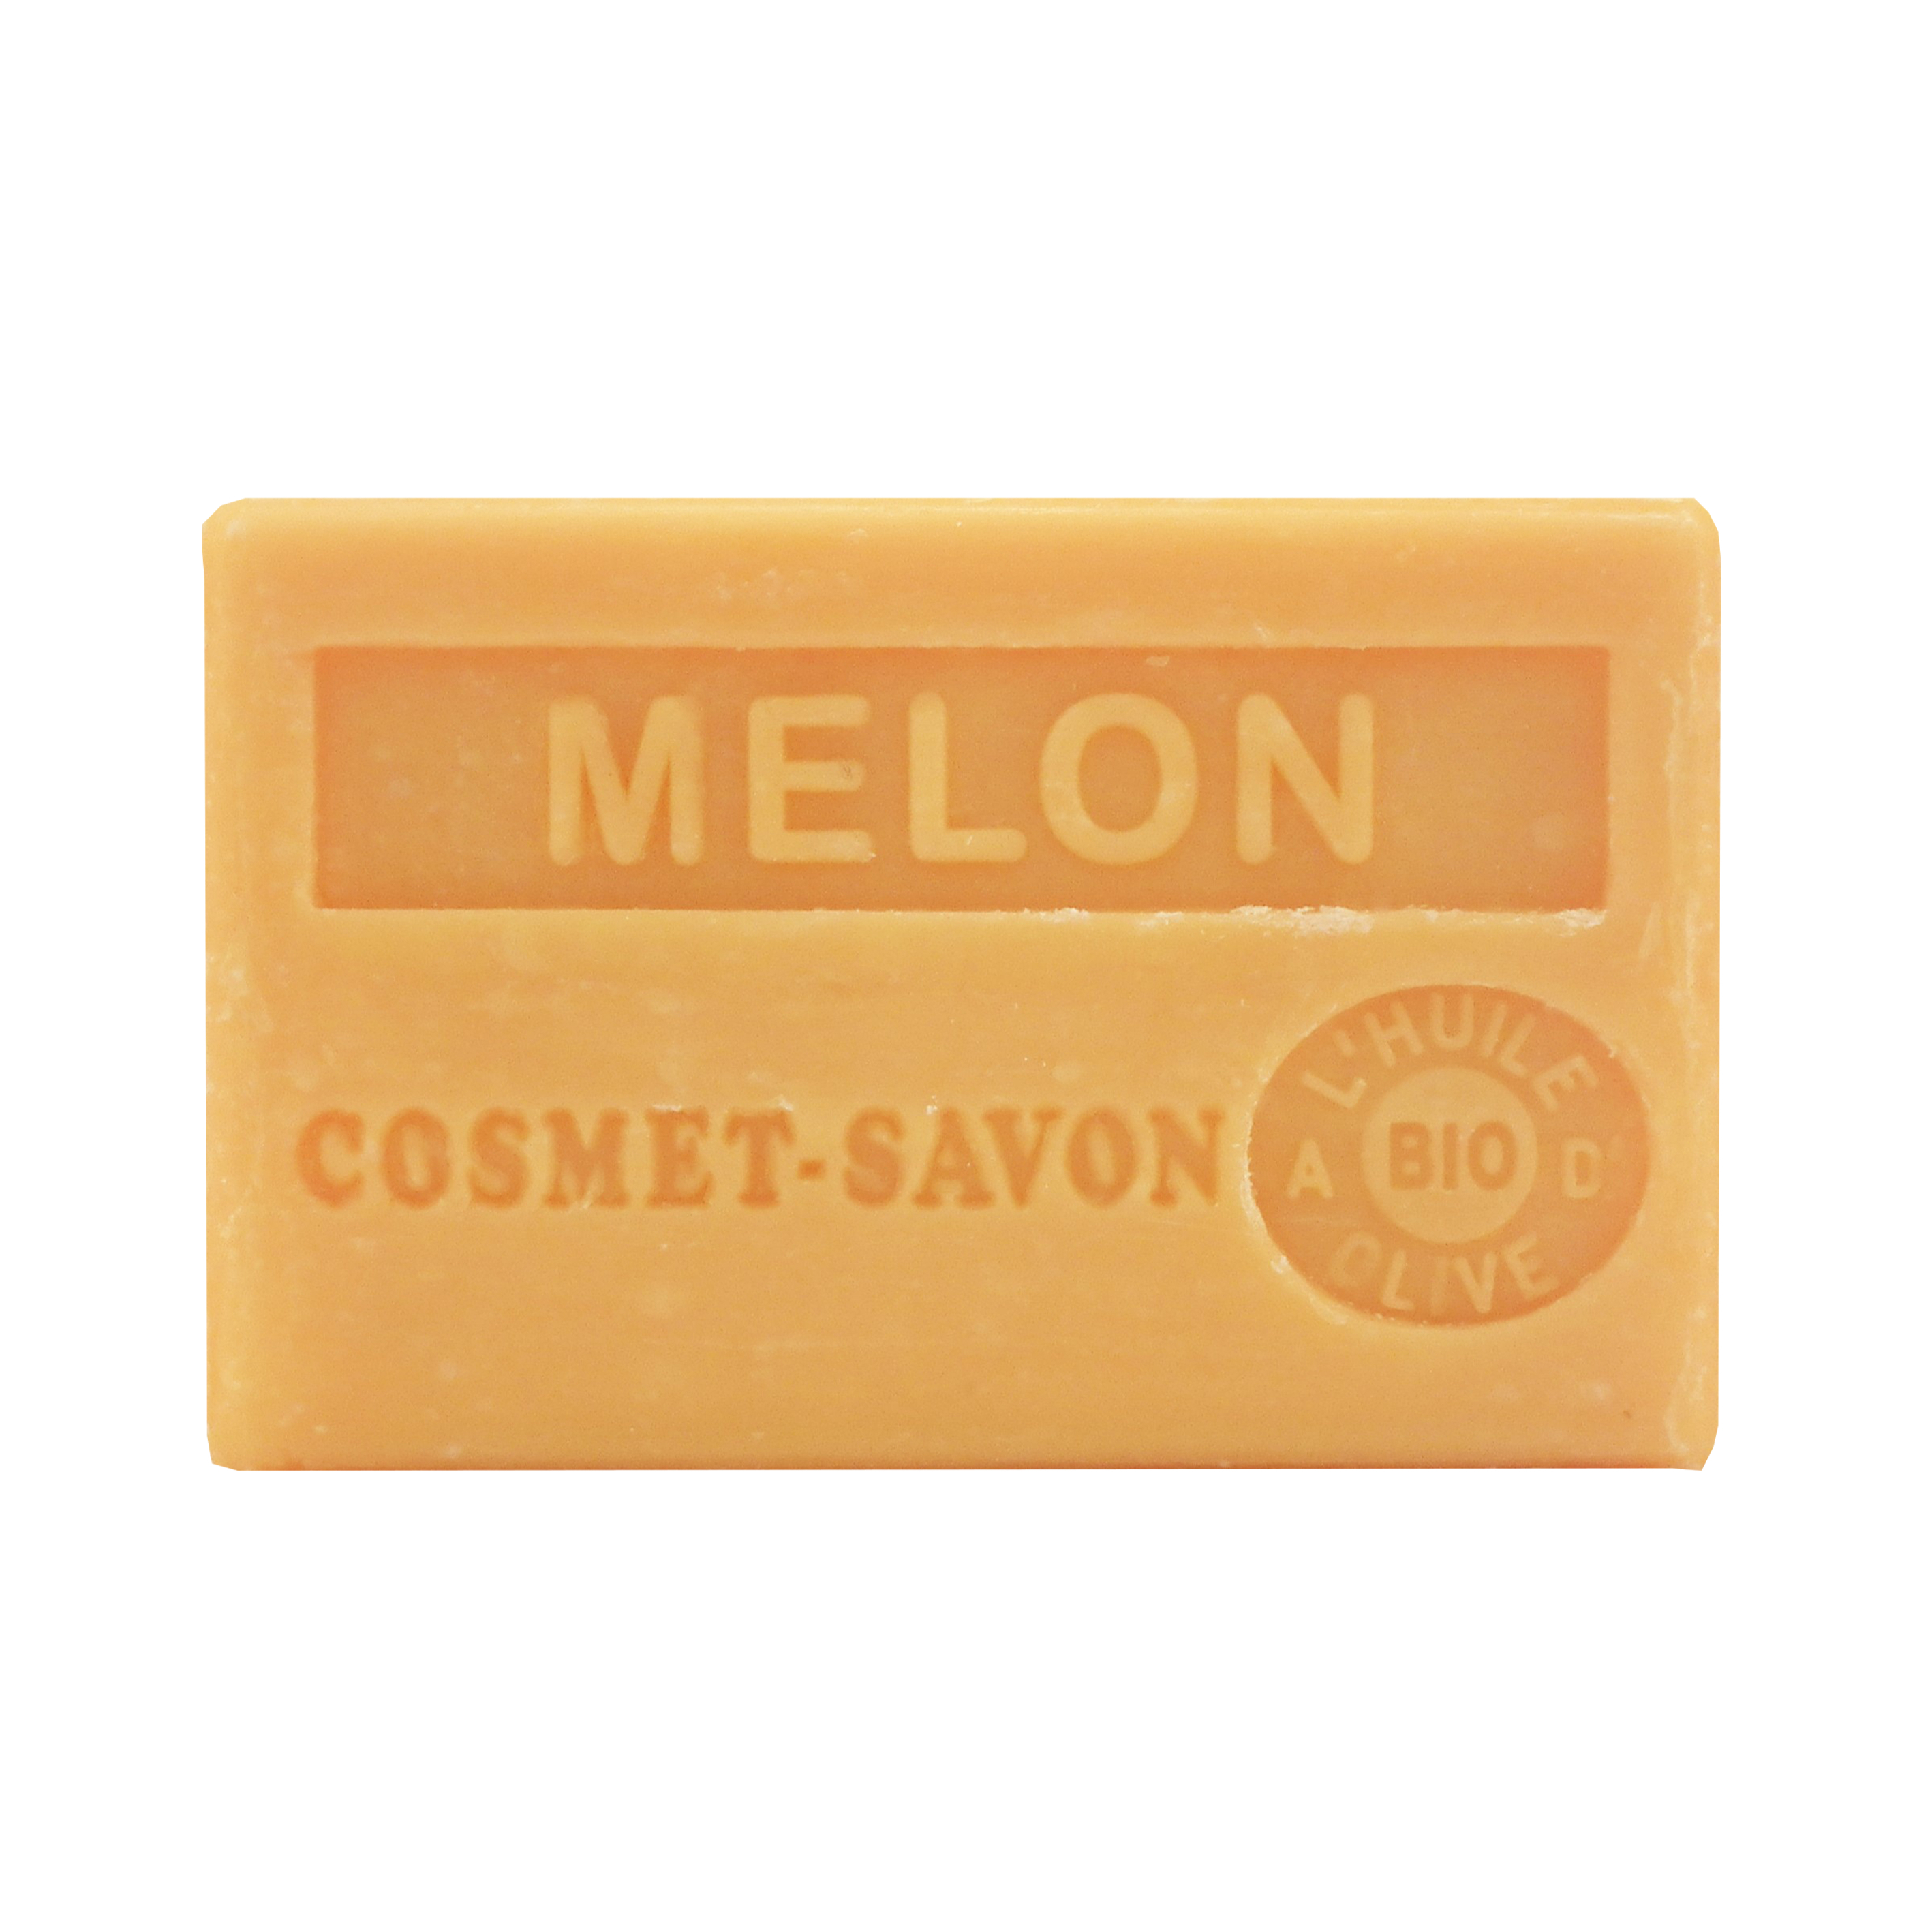 melon-savon-125gr-au-beurre-de-karite-bio-cosmet-savon-36652050066508-face-JPEG